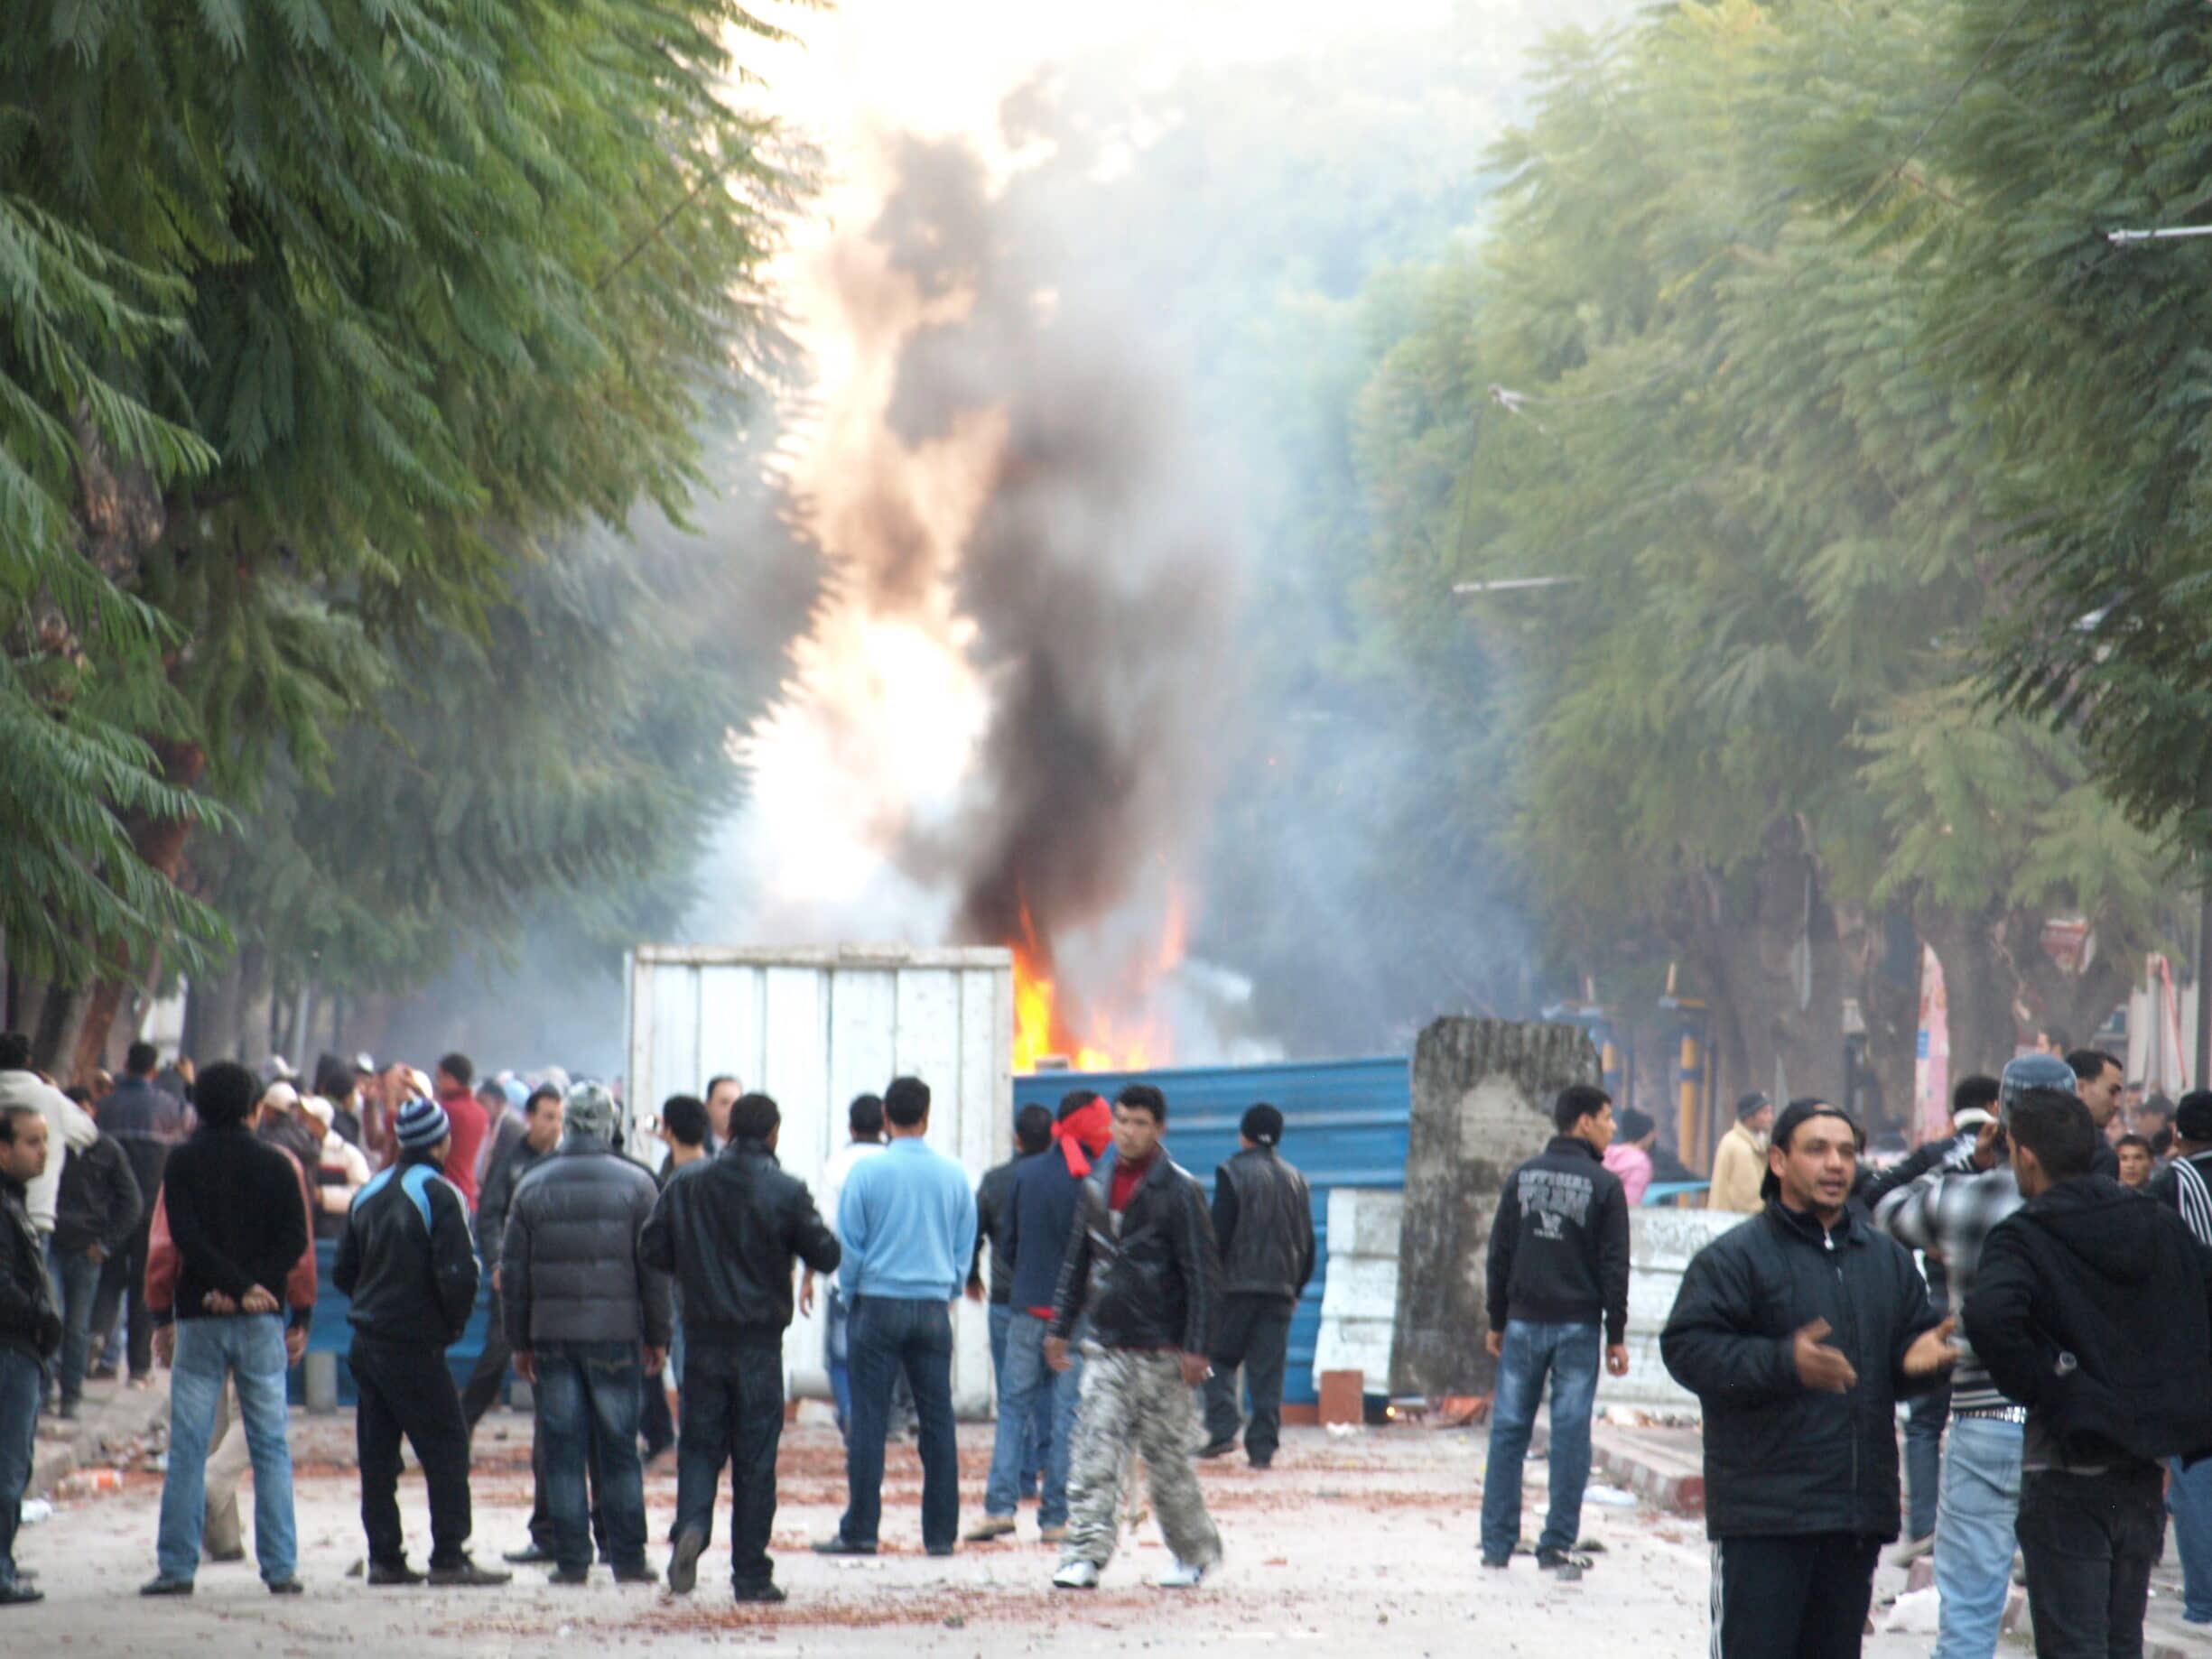 Barricades during the Jasmine Revolution in Tunisia, 14 January 2011. Photo: raphaelthelen. (CC BY 2.0).